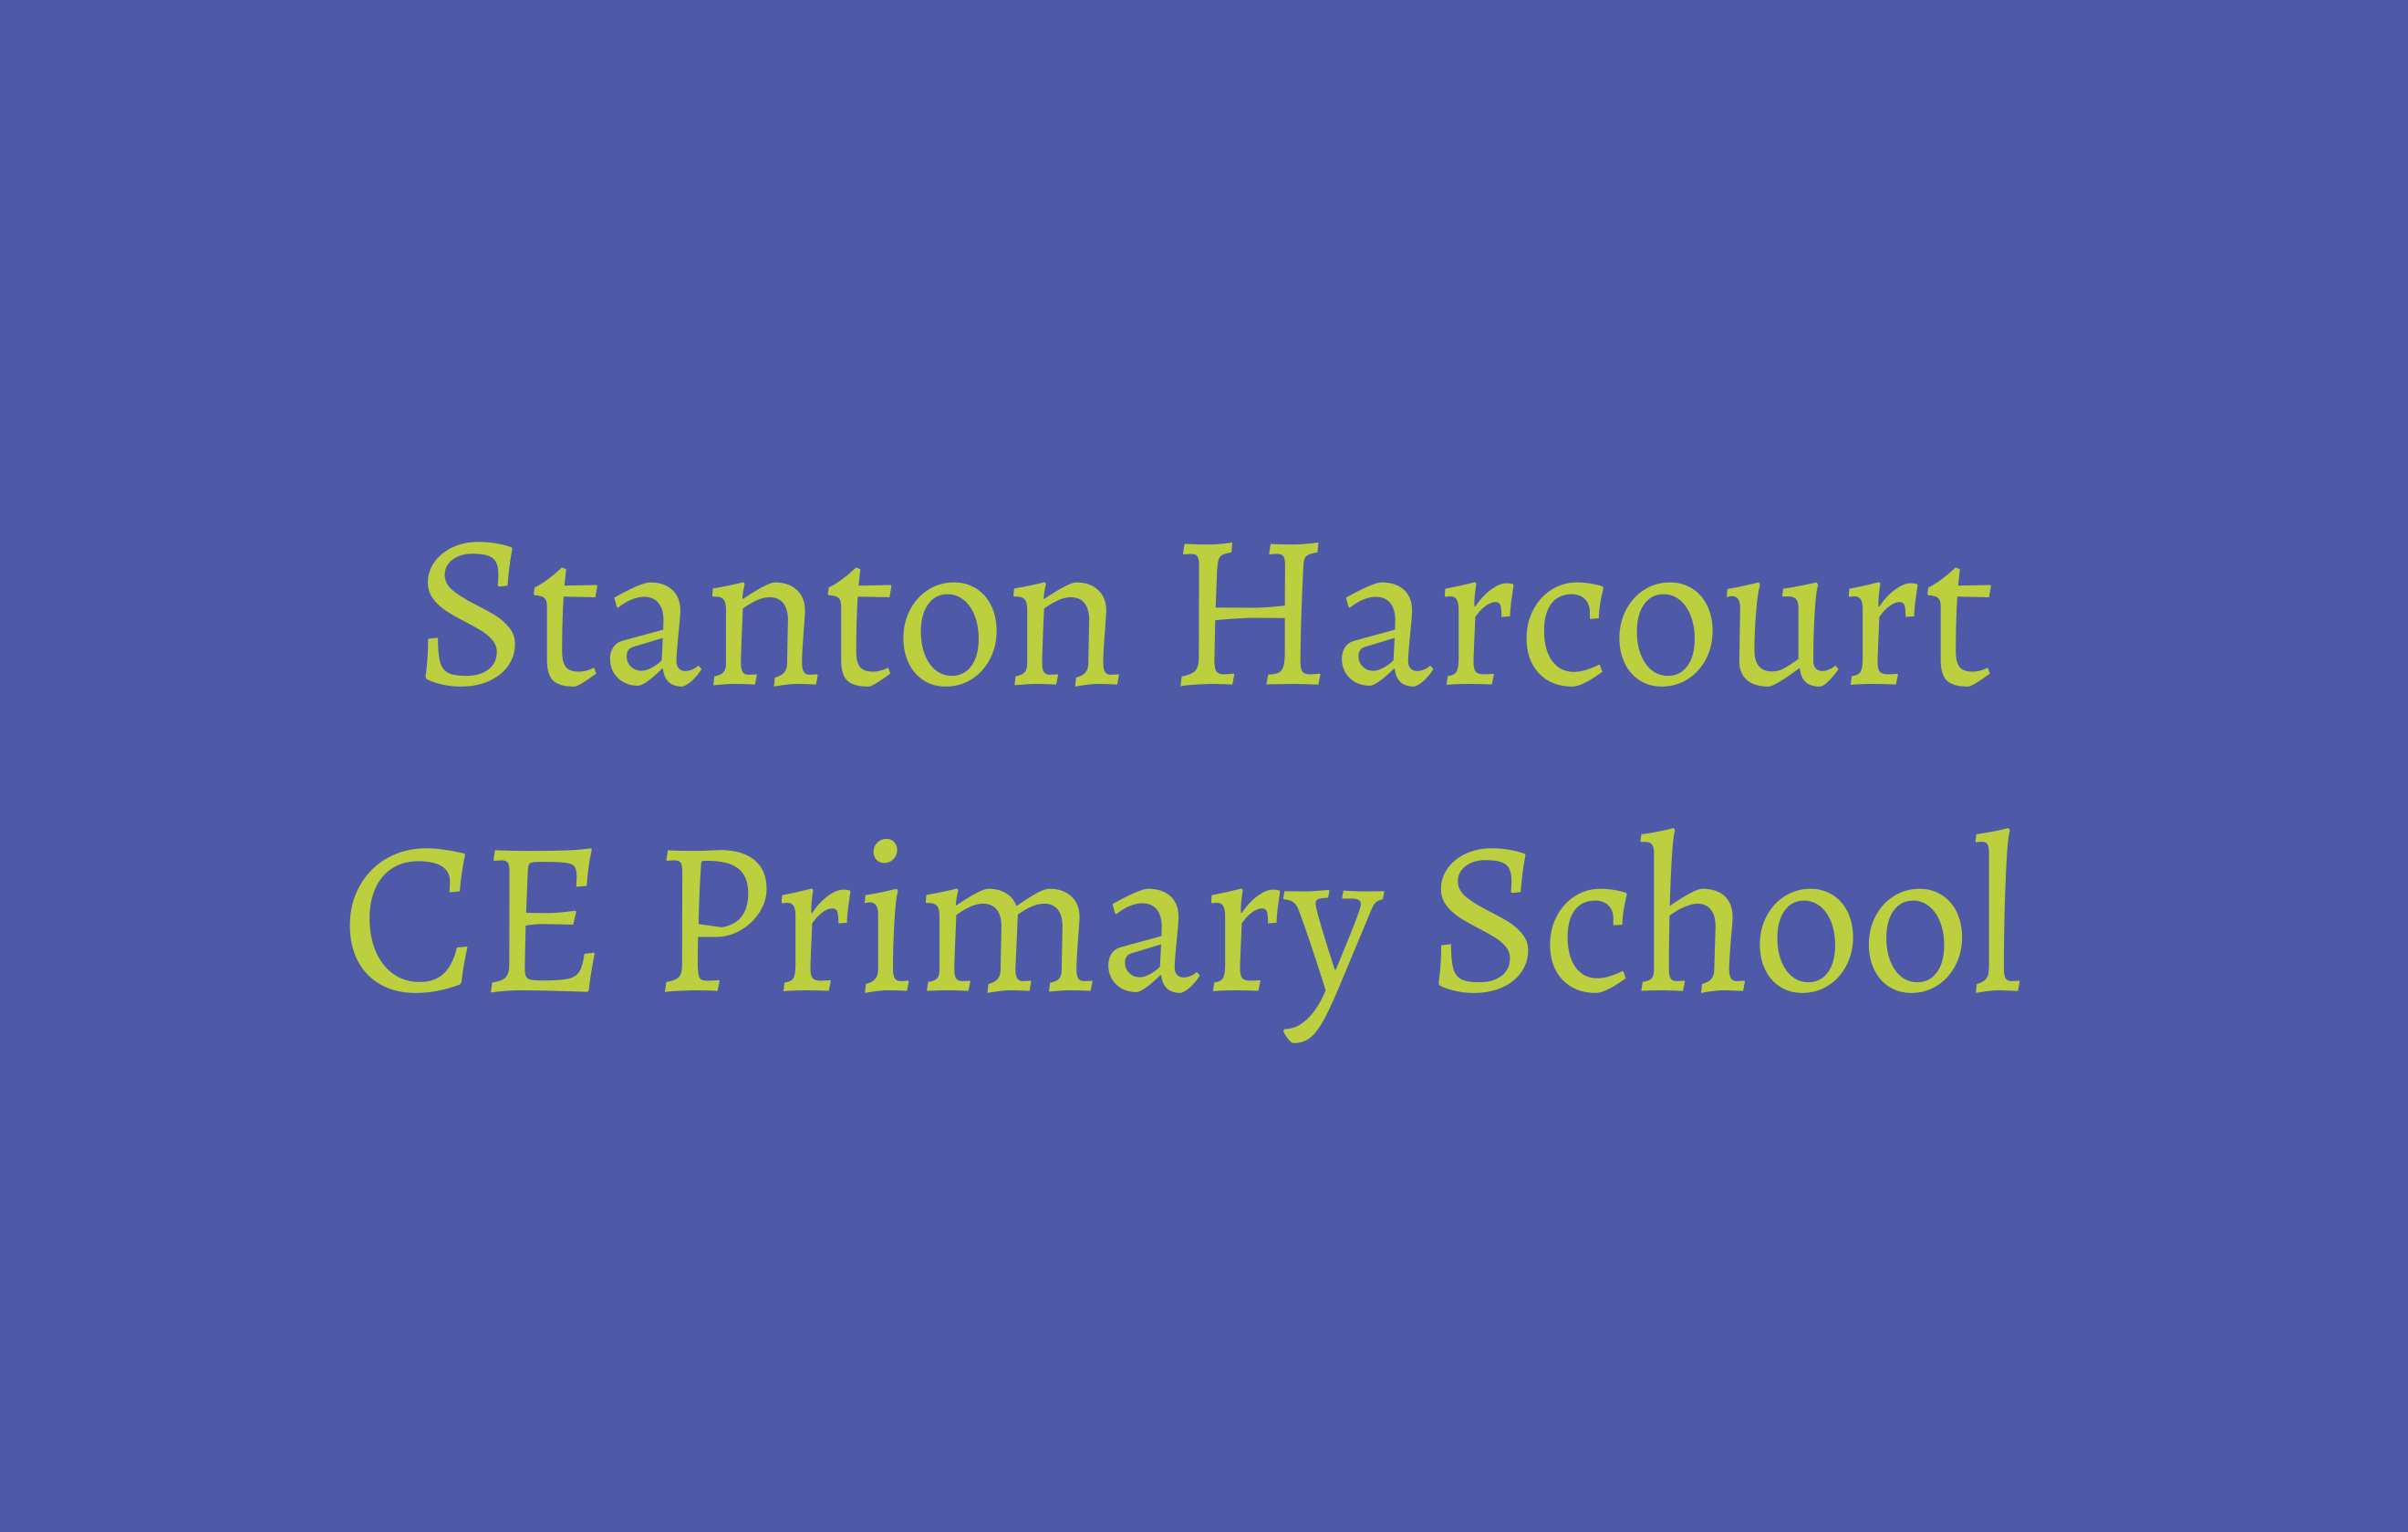 Stanton Harcourt School Projects